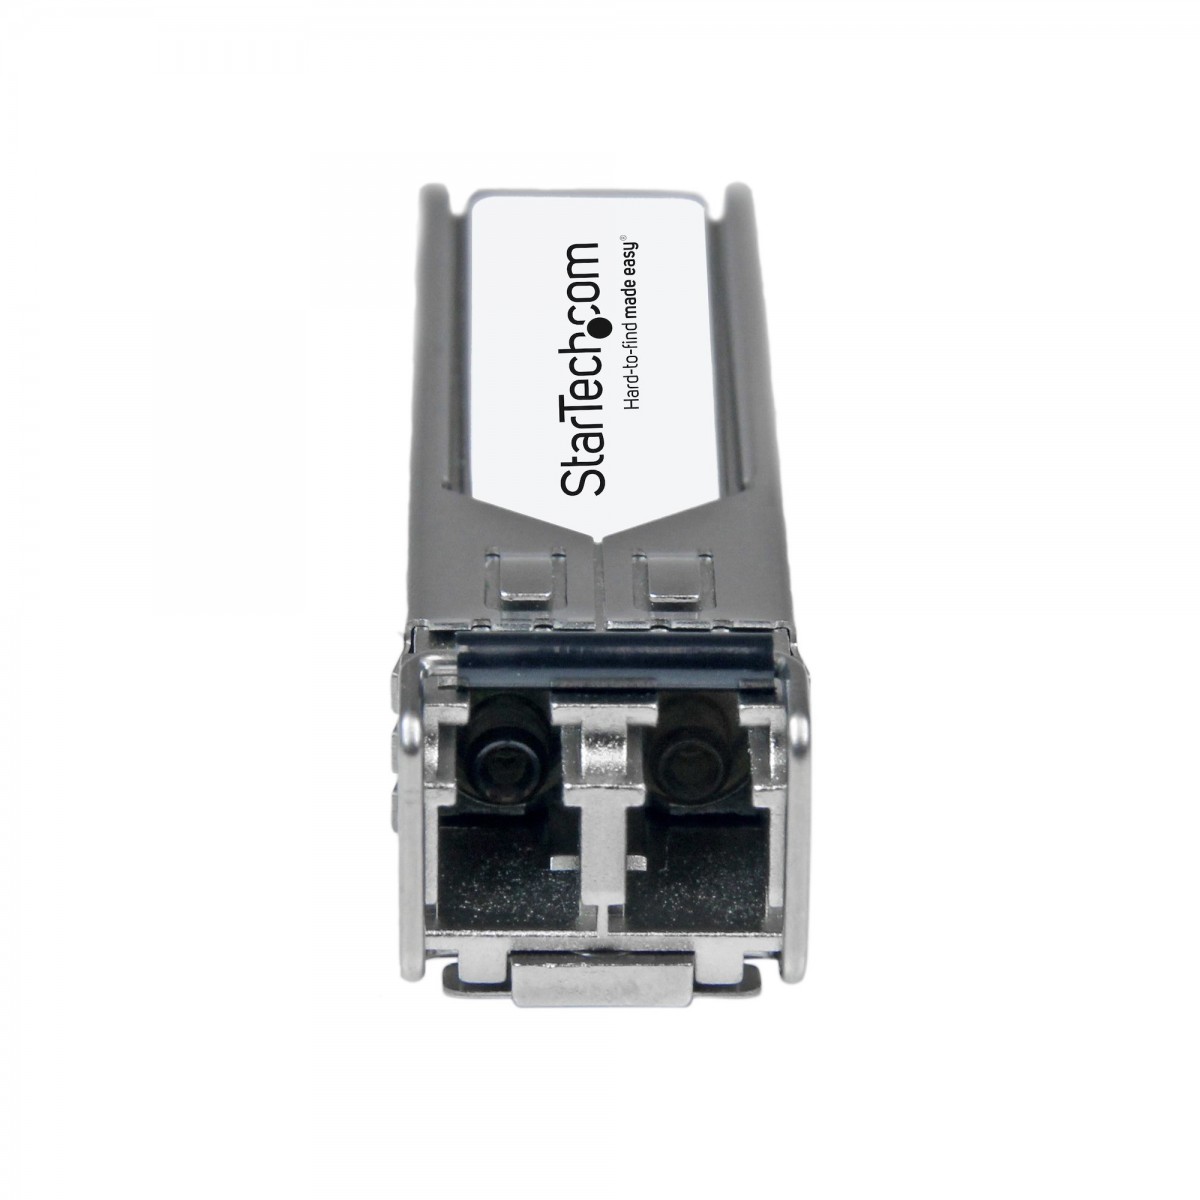 StarTech.com HPE J9150D Compatible SFP+ Module - 10GBASE-SR - 10GbE Multi Mode Fiber Optic Transceiver - 10GE Gigabit Ethernet S